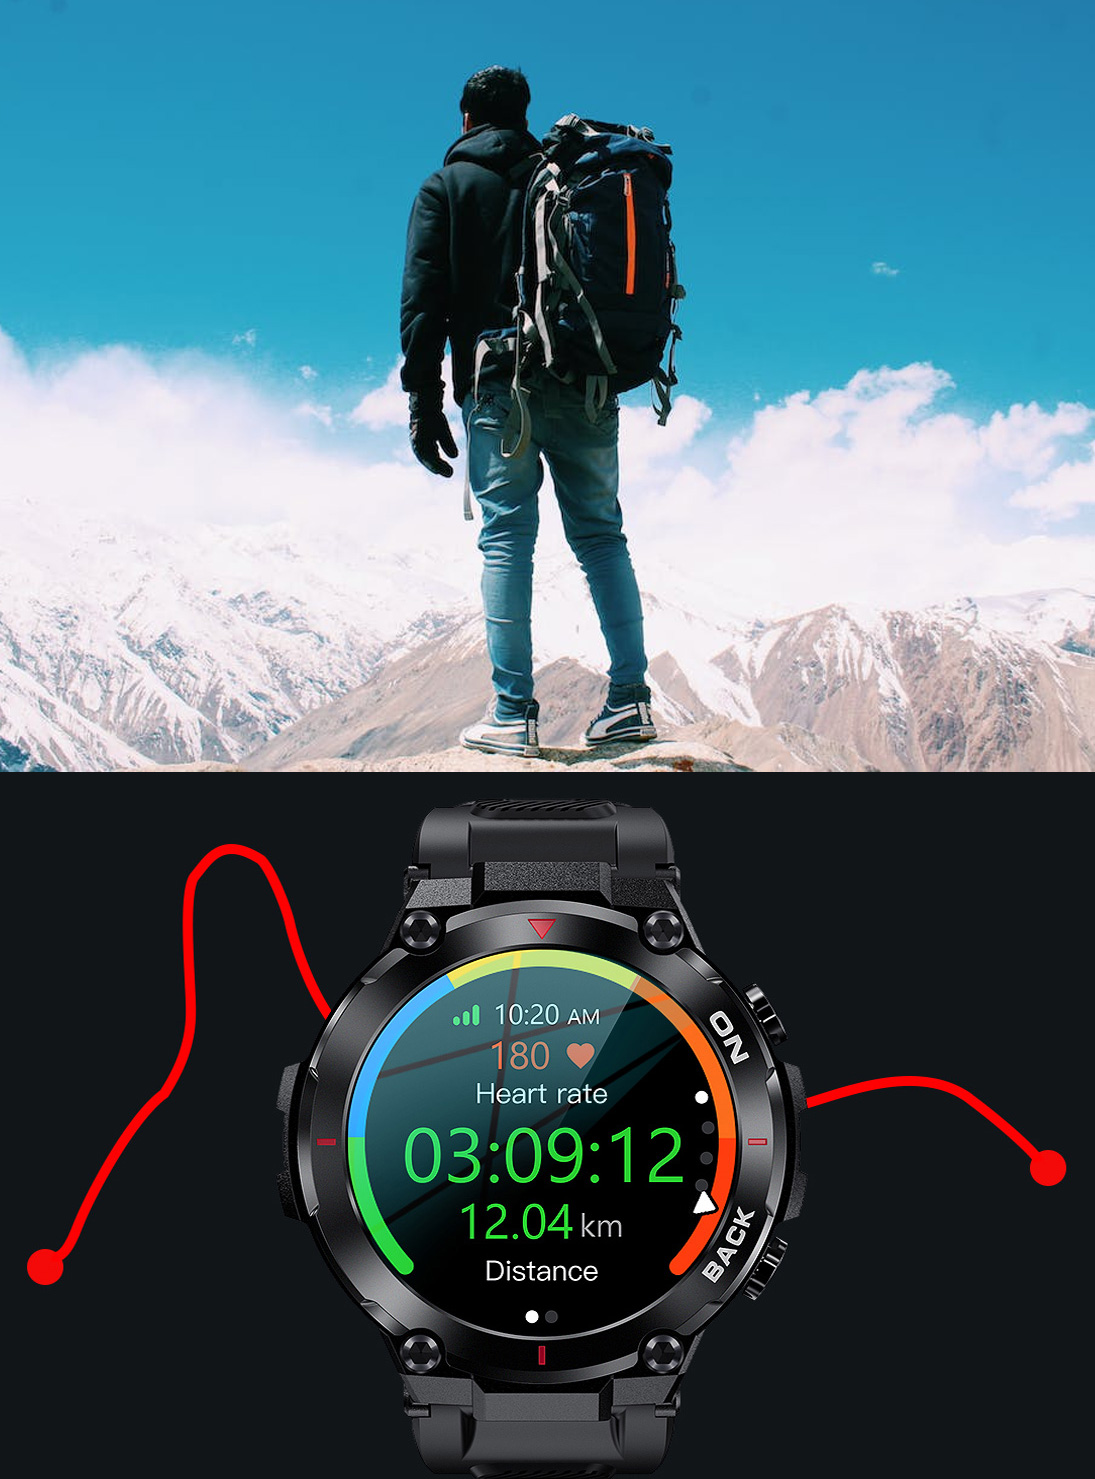 Zegarek męski SMARTWATCH  z GPS HEXAL-3 